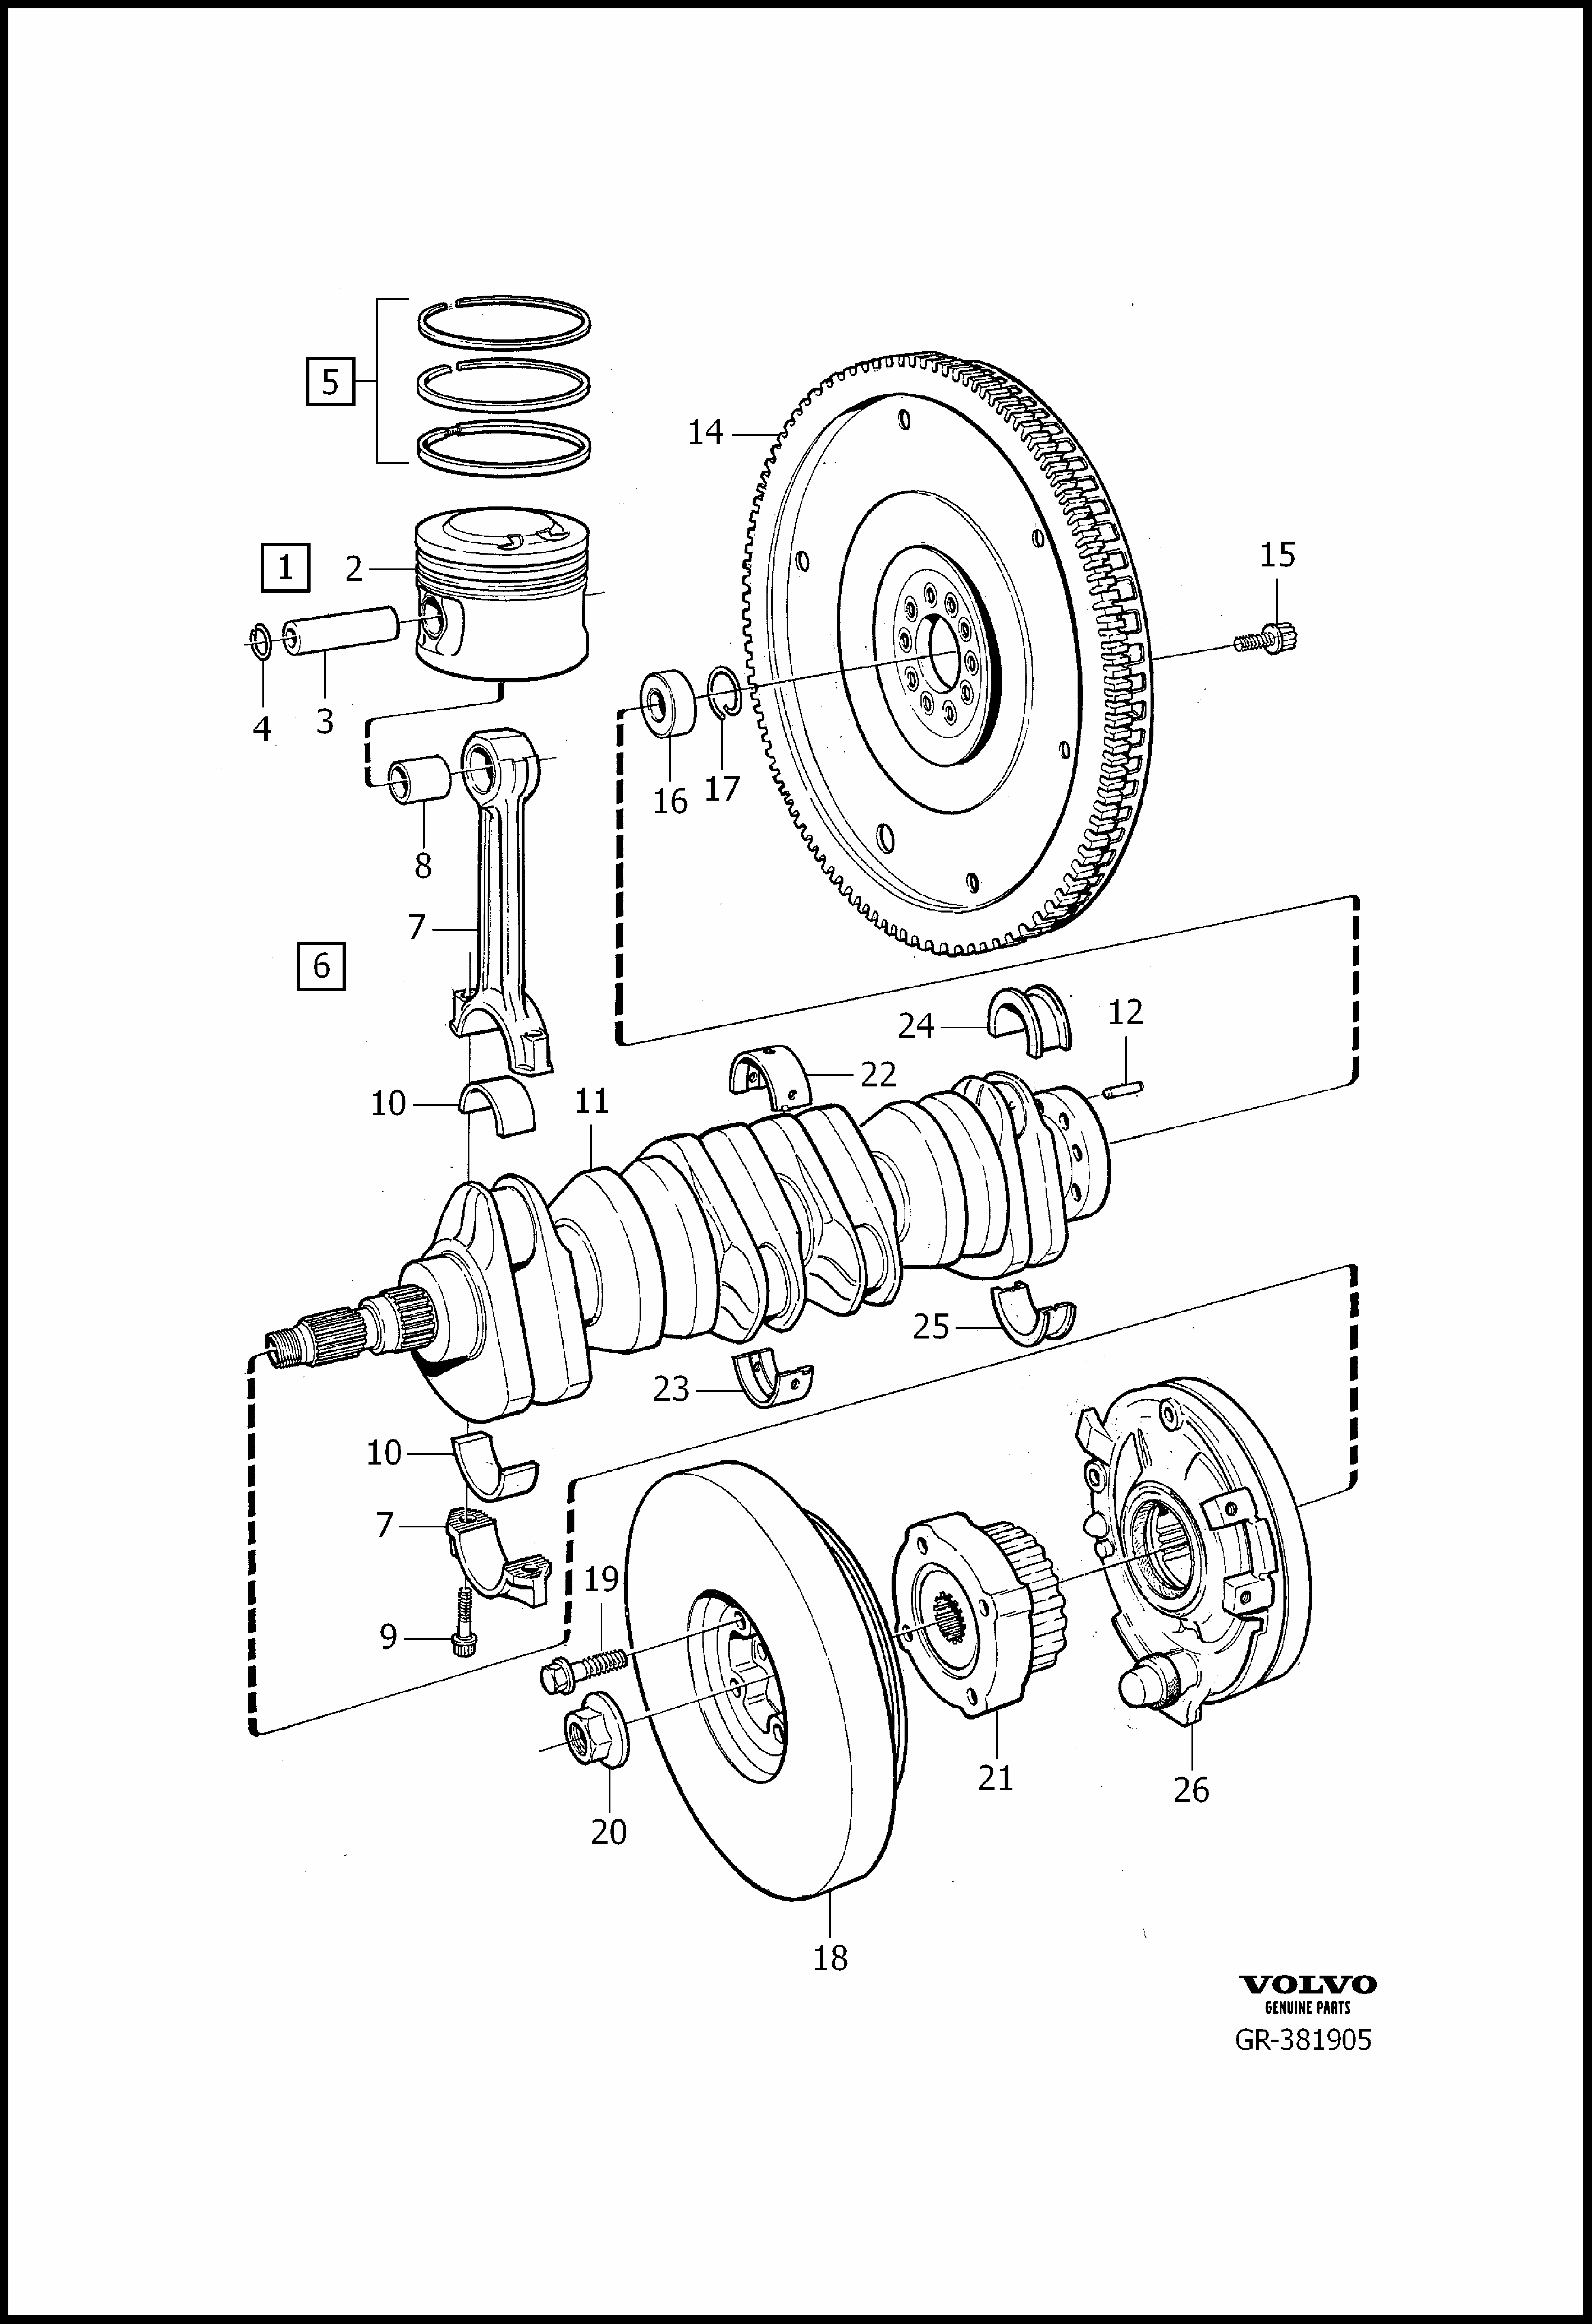 crank mechanism til Volvo 960 960